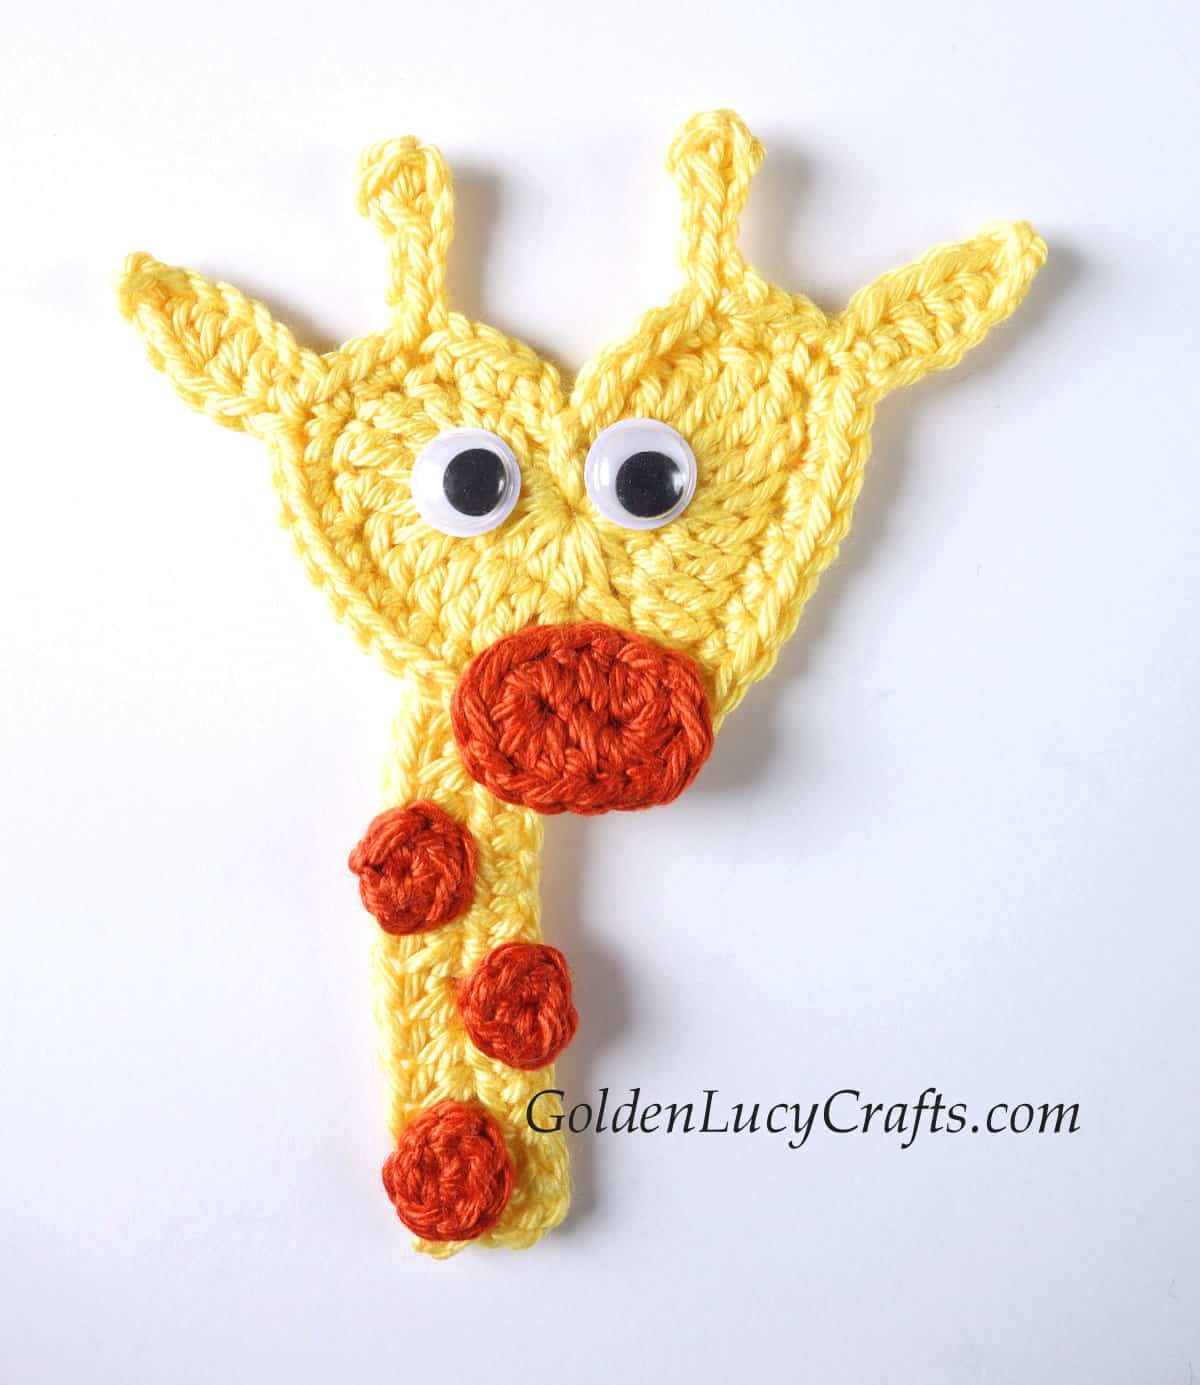 Crochet applique giraffe with heart-shaped head.